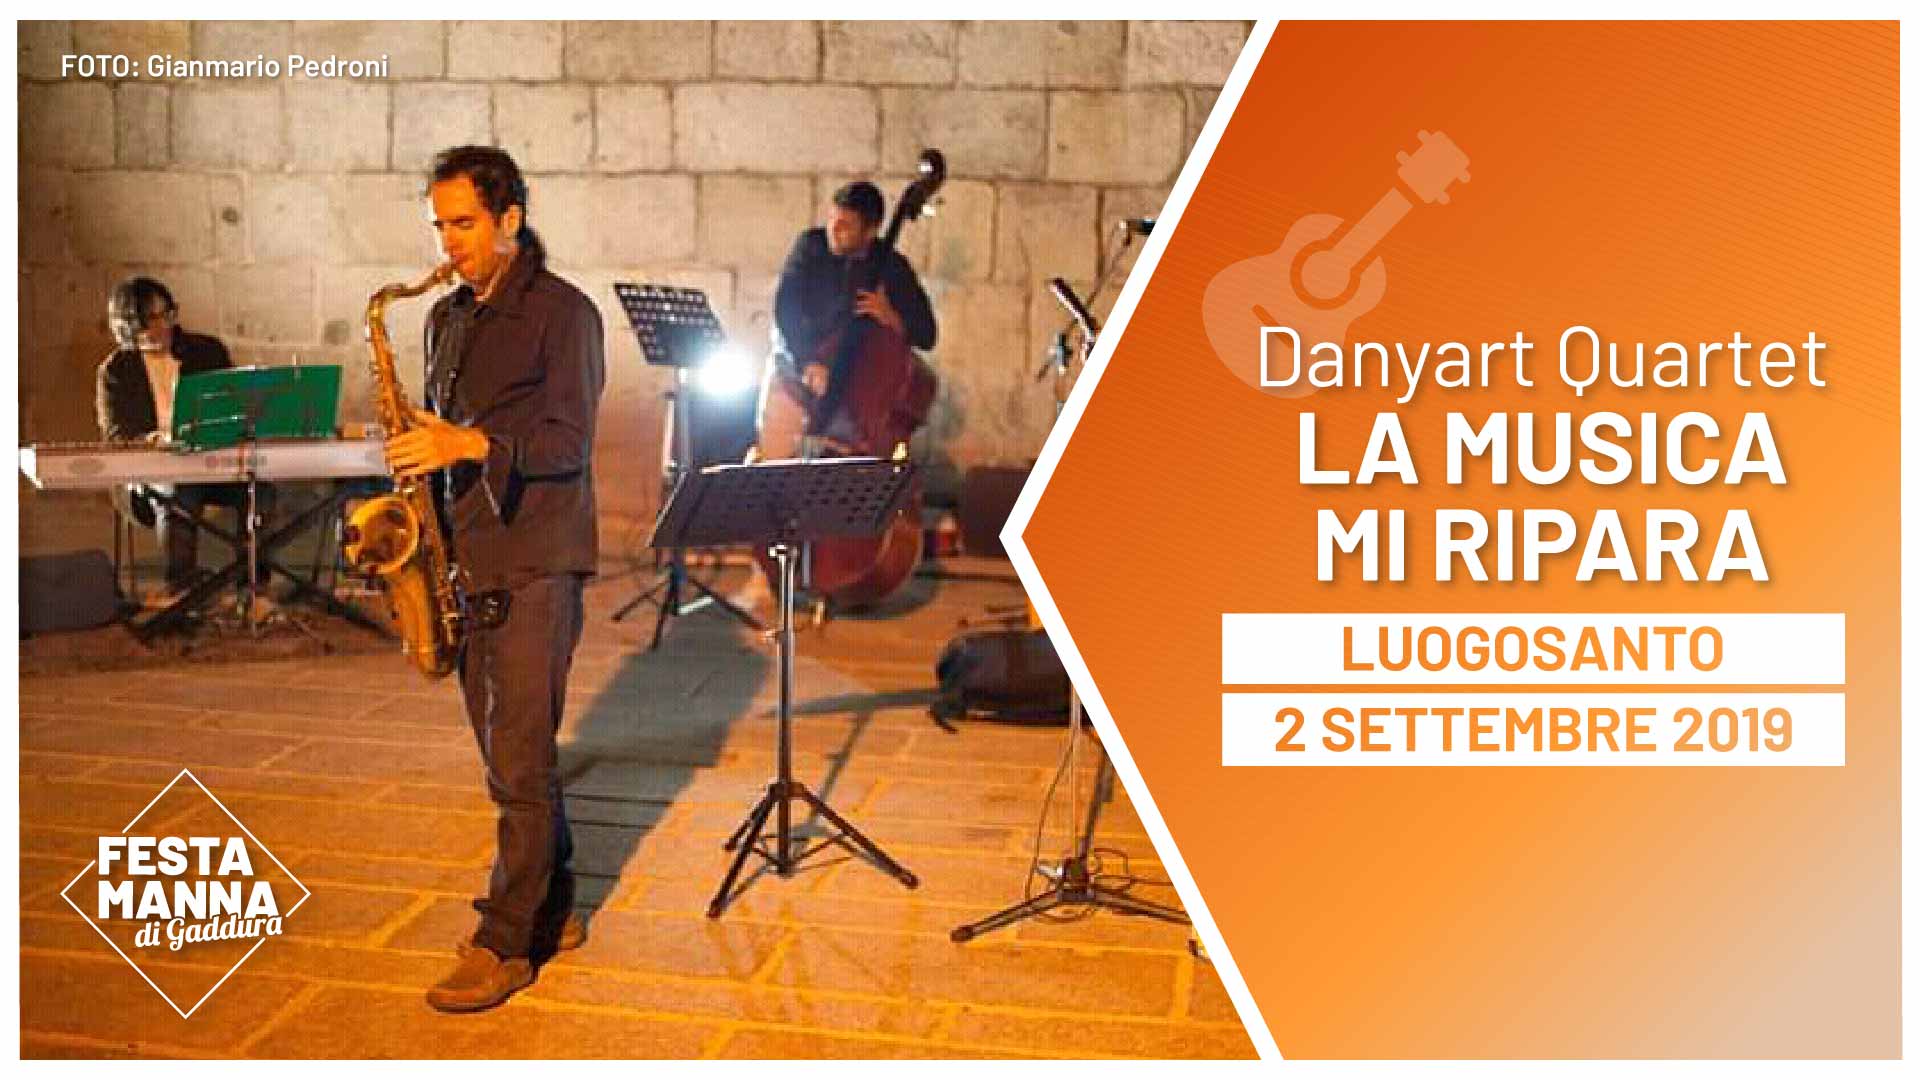  “La musica mi ripara”, concierto de jazz del Cuarteto Danyart | Festa Manna di Gaddura 2019